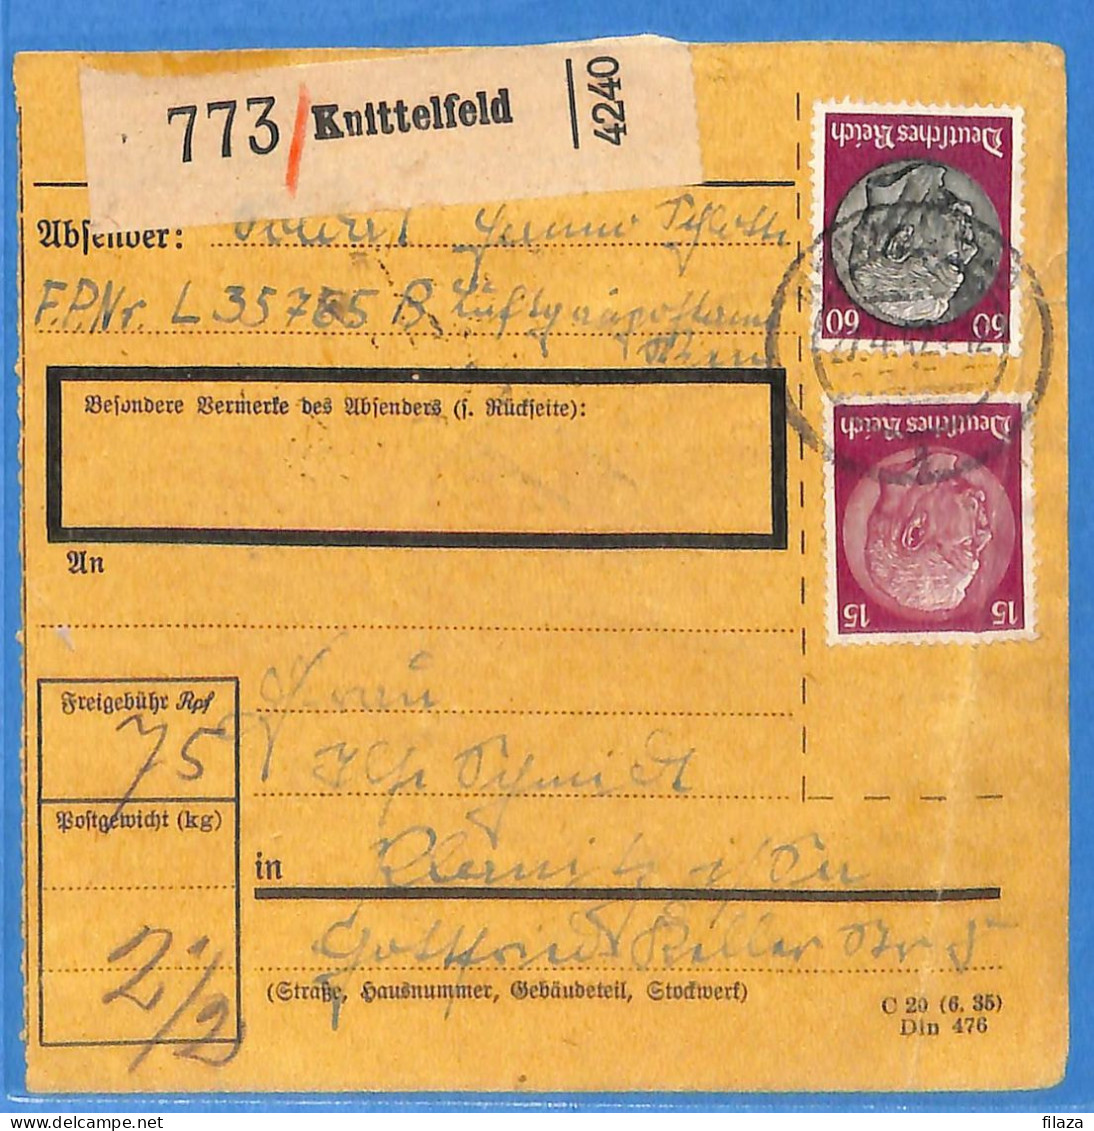 Allemagne Reich 1942 - Carte Postale De Knittelfeld - G33492 - Covers & Documents